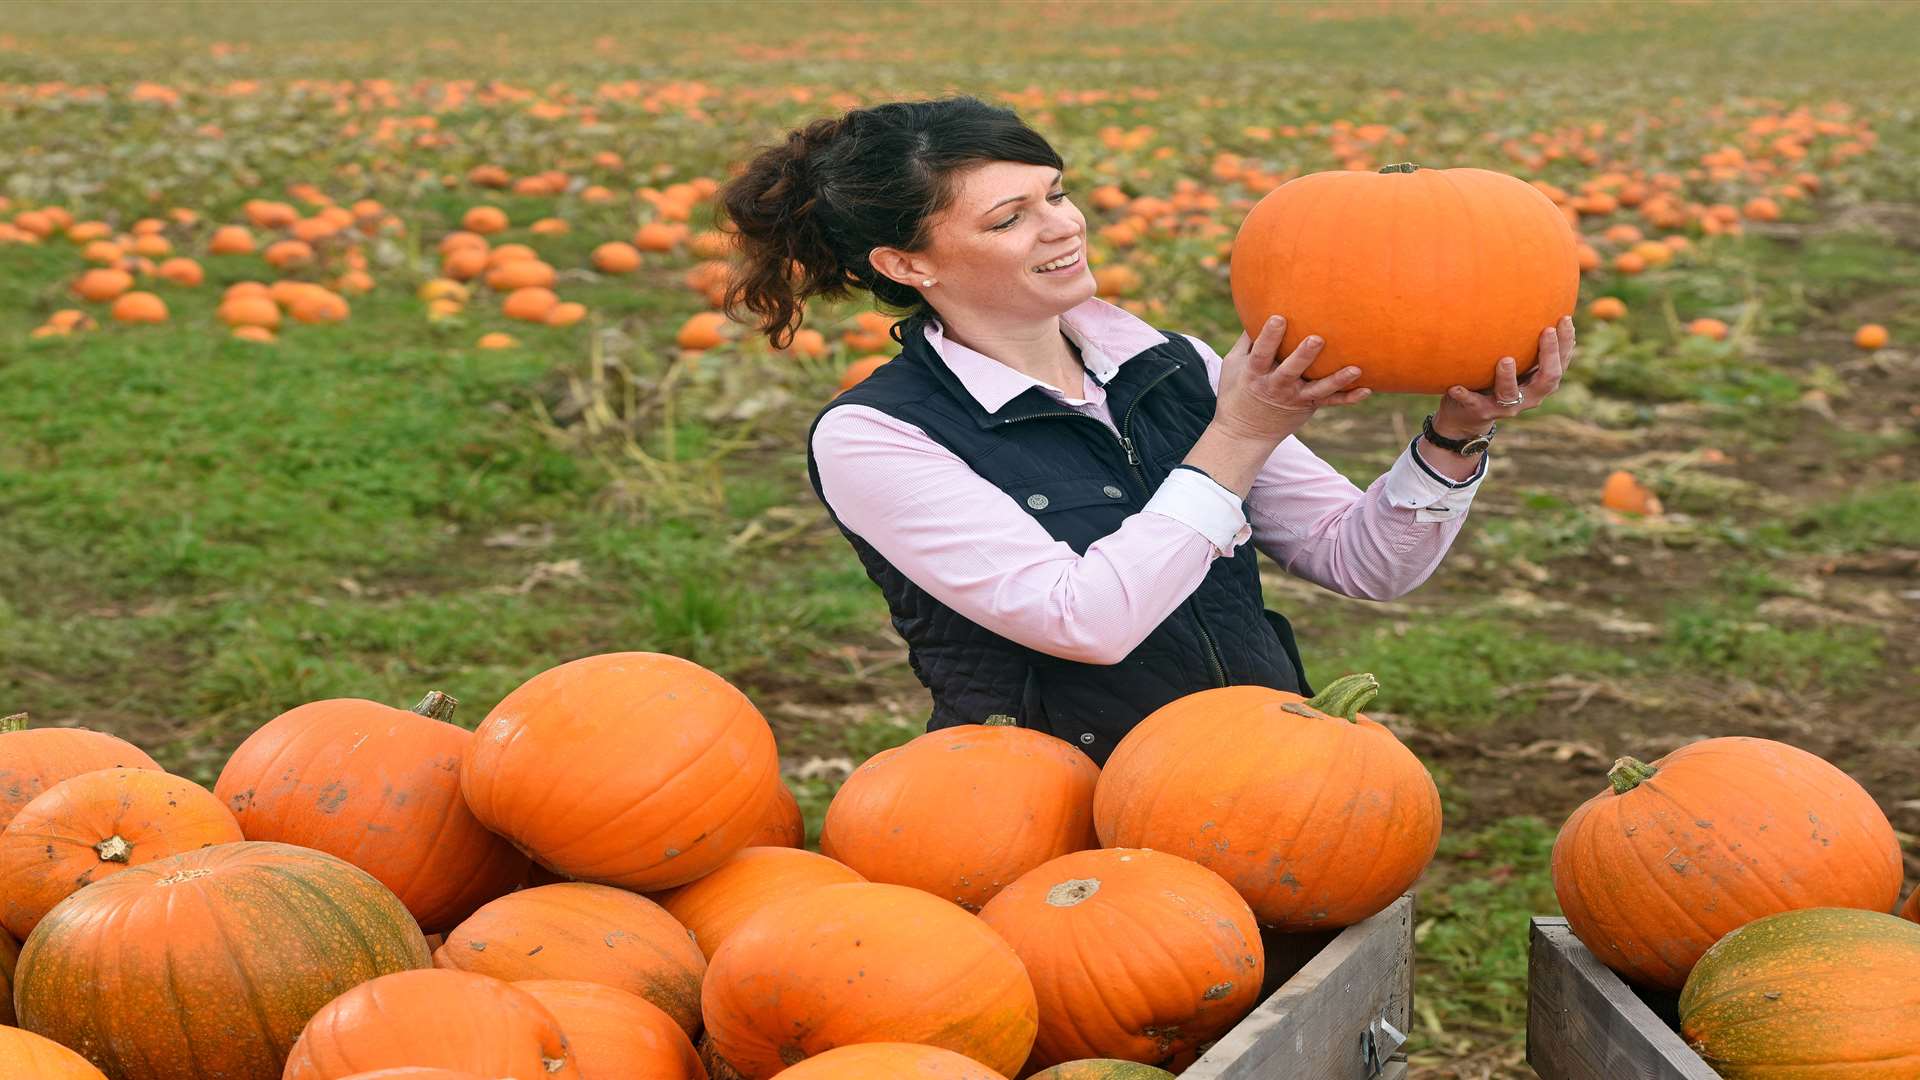 Why not go pumpkin picking?